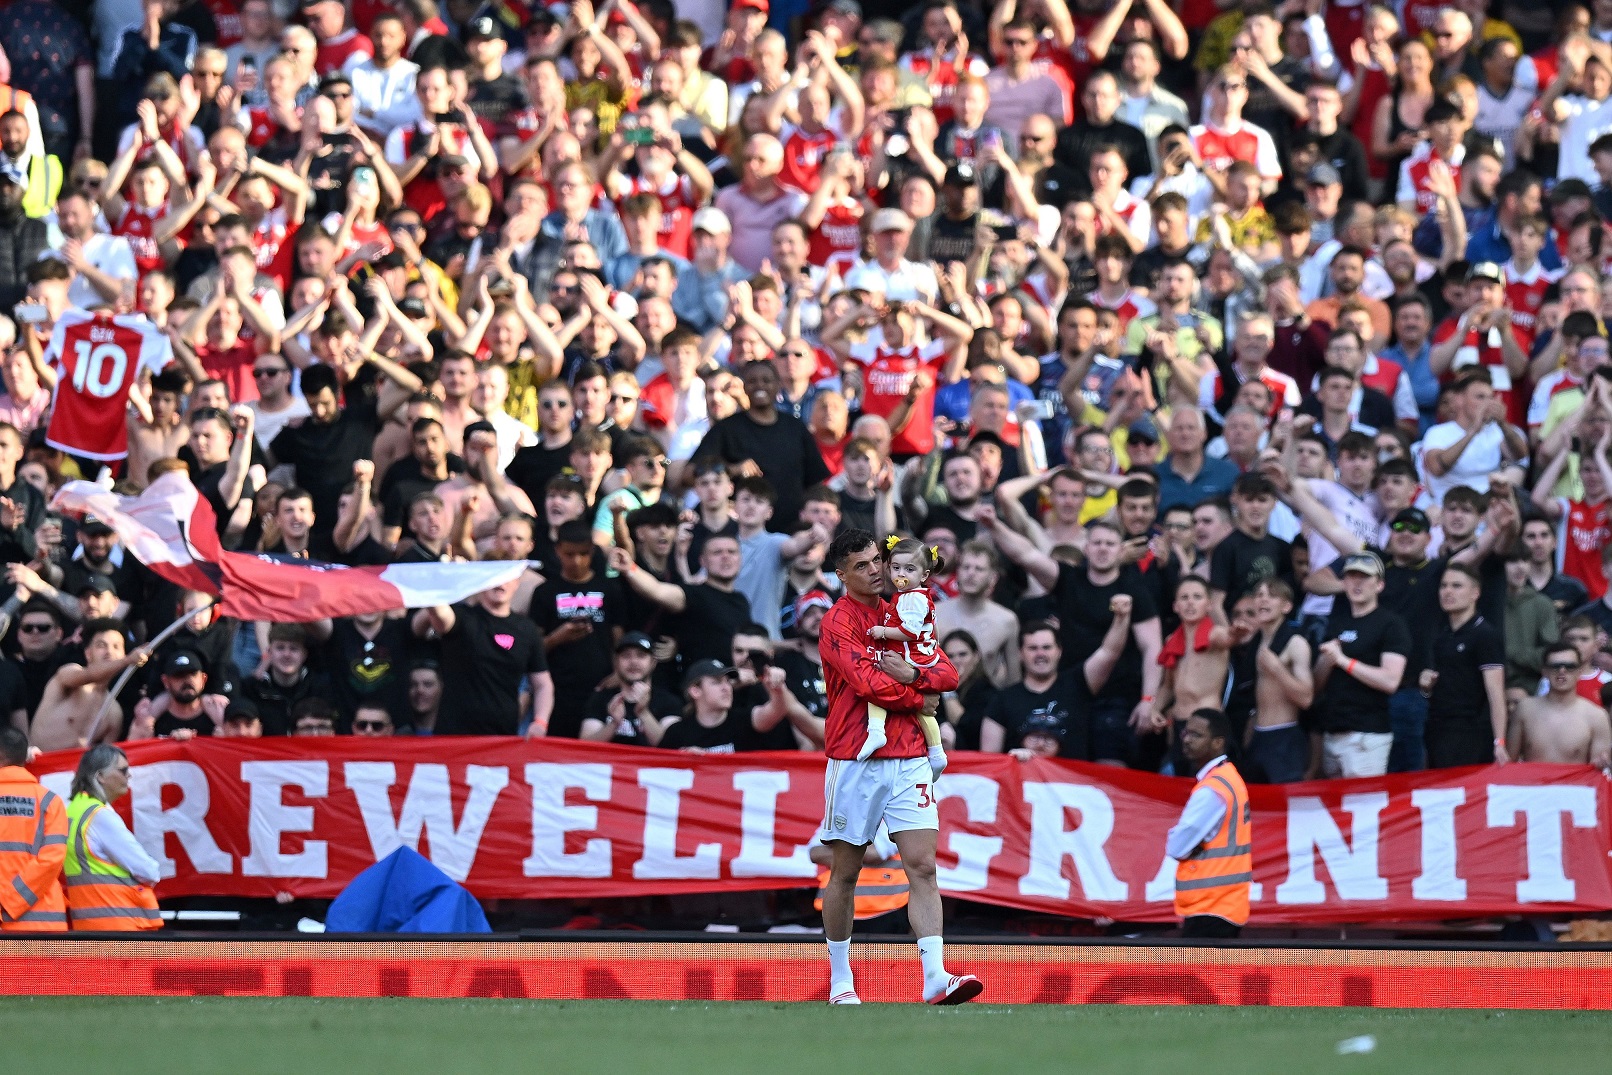 Arsenal's 2012/13 Season Review: Poor Start, Great Finish - Gooner Daily